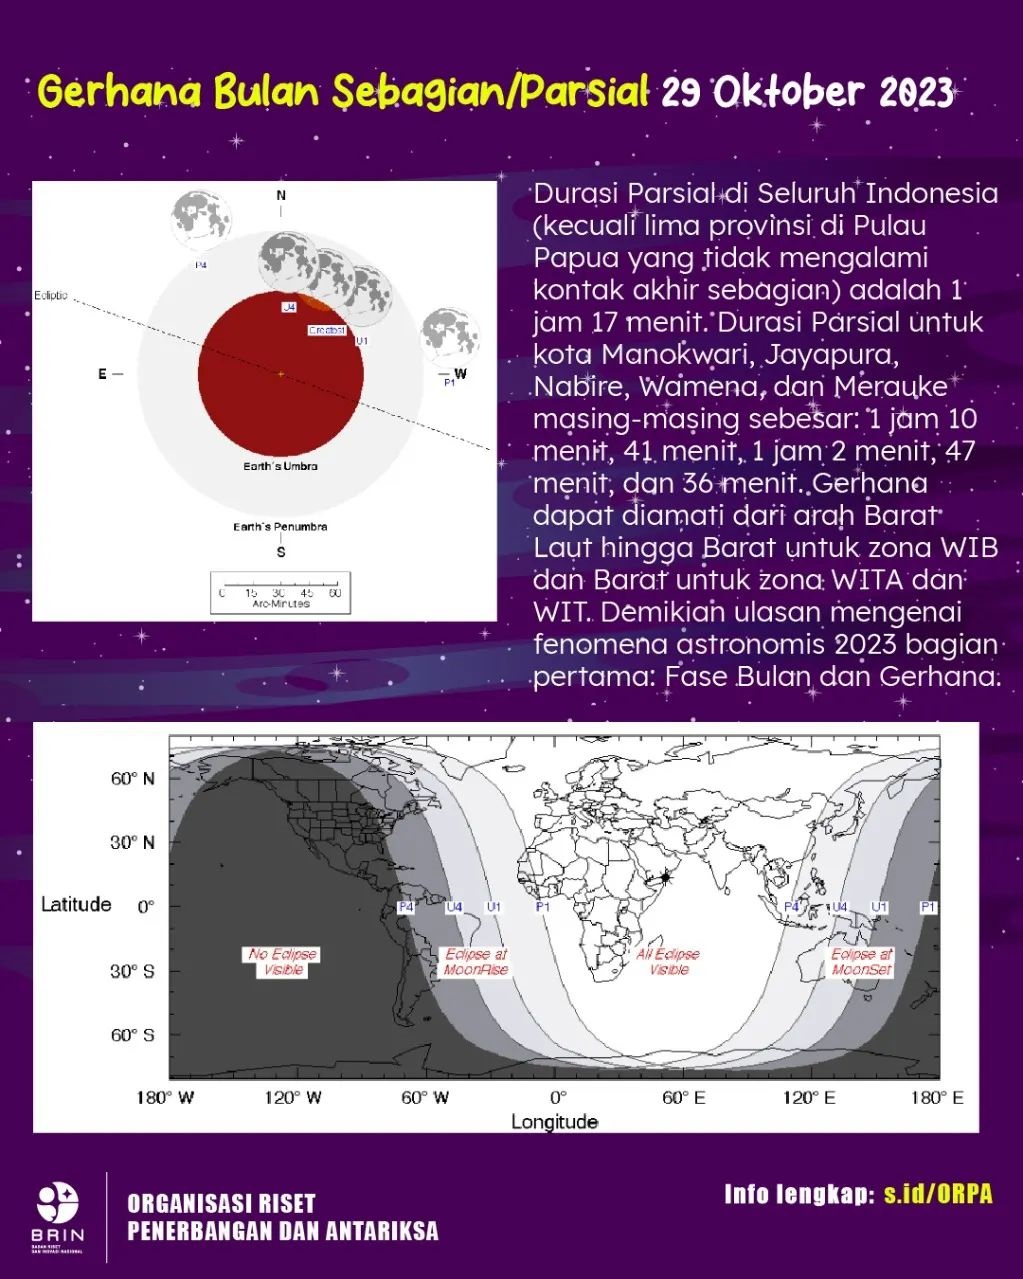 Mendengarkan!  Lengkap dengan pengaturan waktu gerhana bulan 2023, dapat dilihat di Indonesia